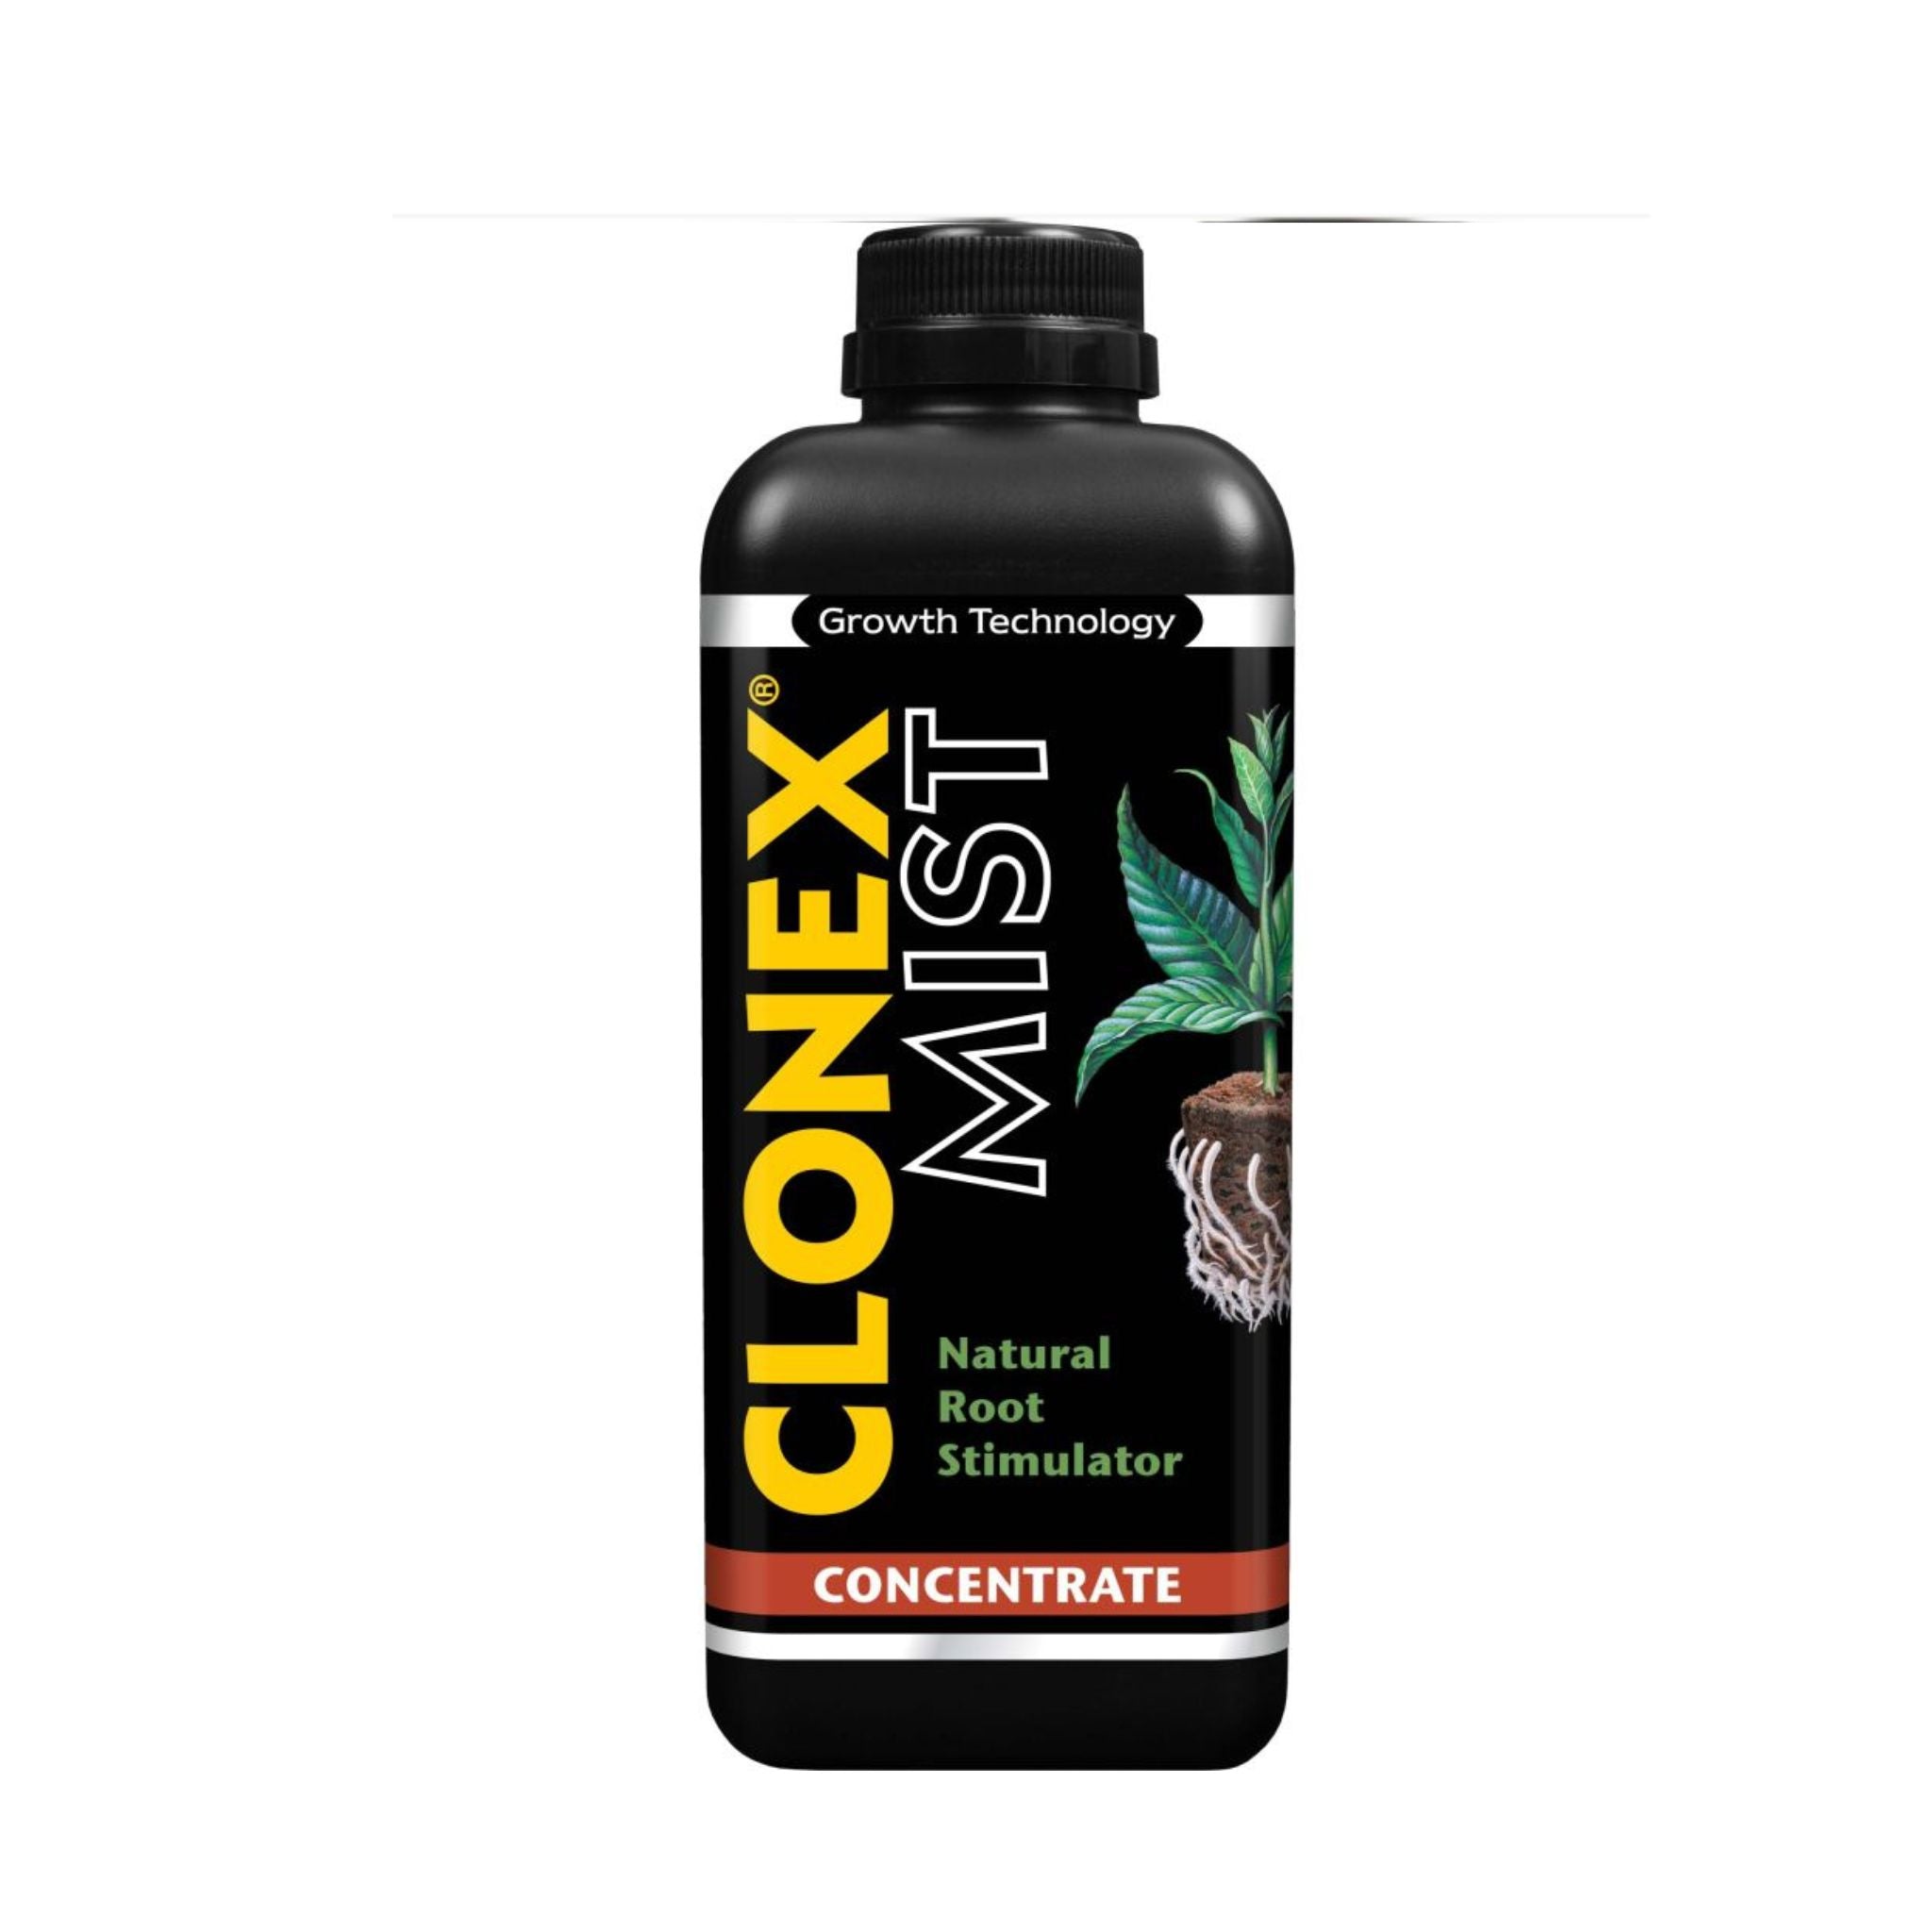 Clonex Mist Root Promoter